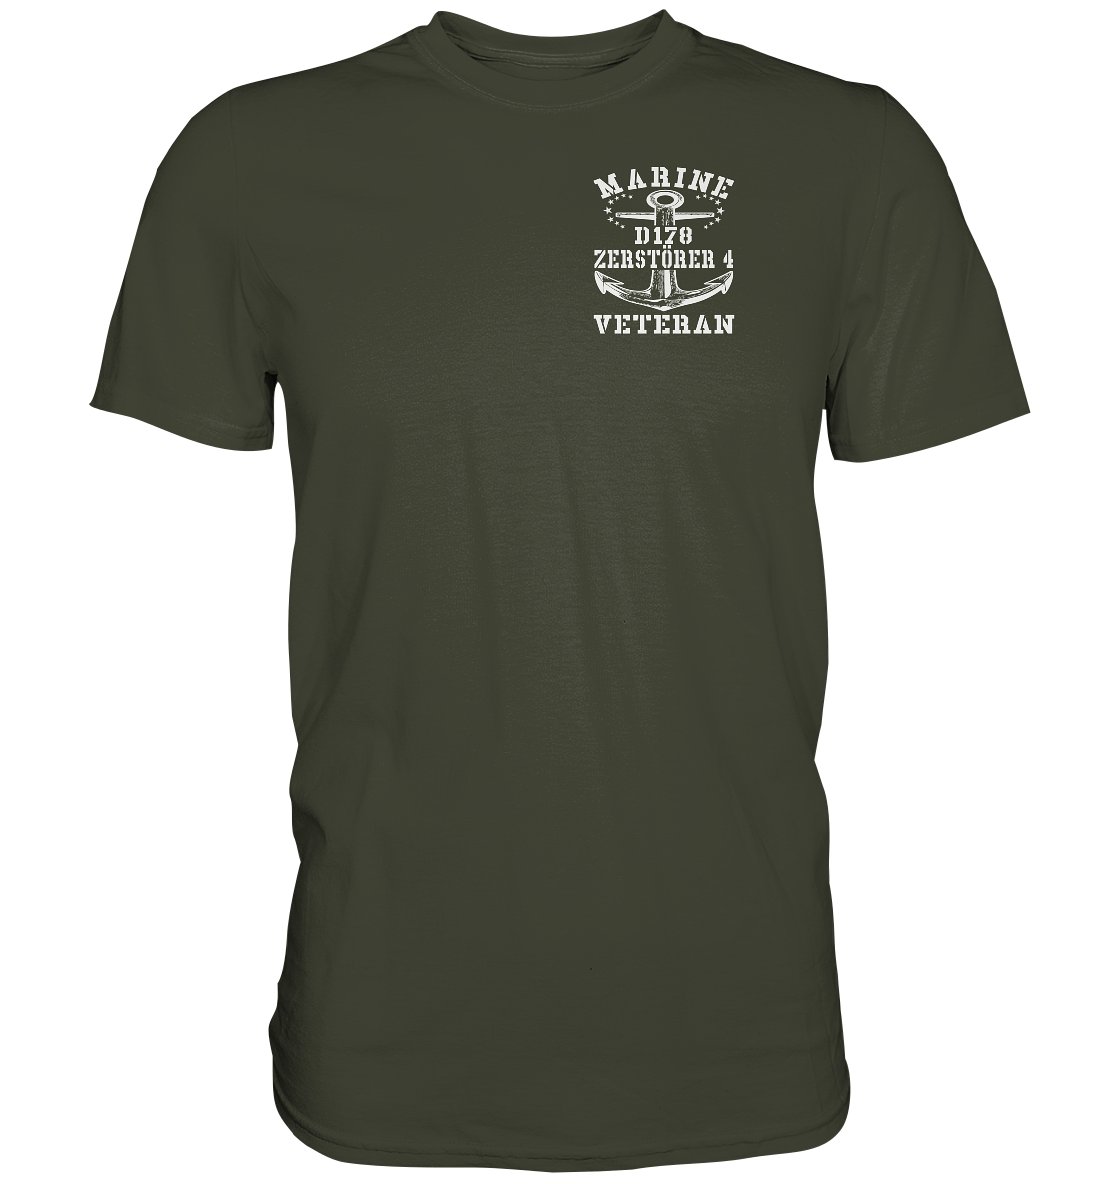 D178 ZERSTÖRER 4 Marine Veteran Brustlogo - Premium Shirt